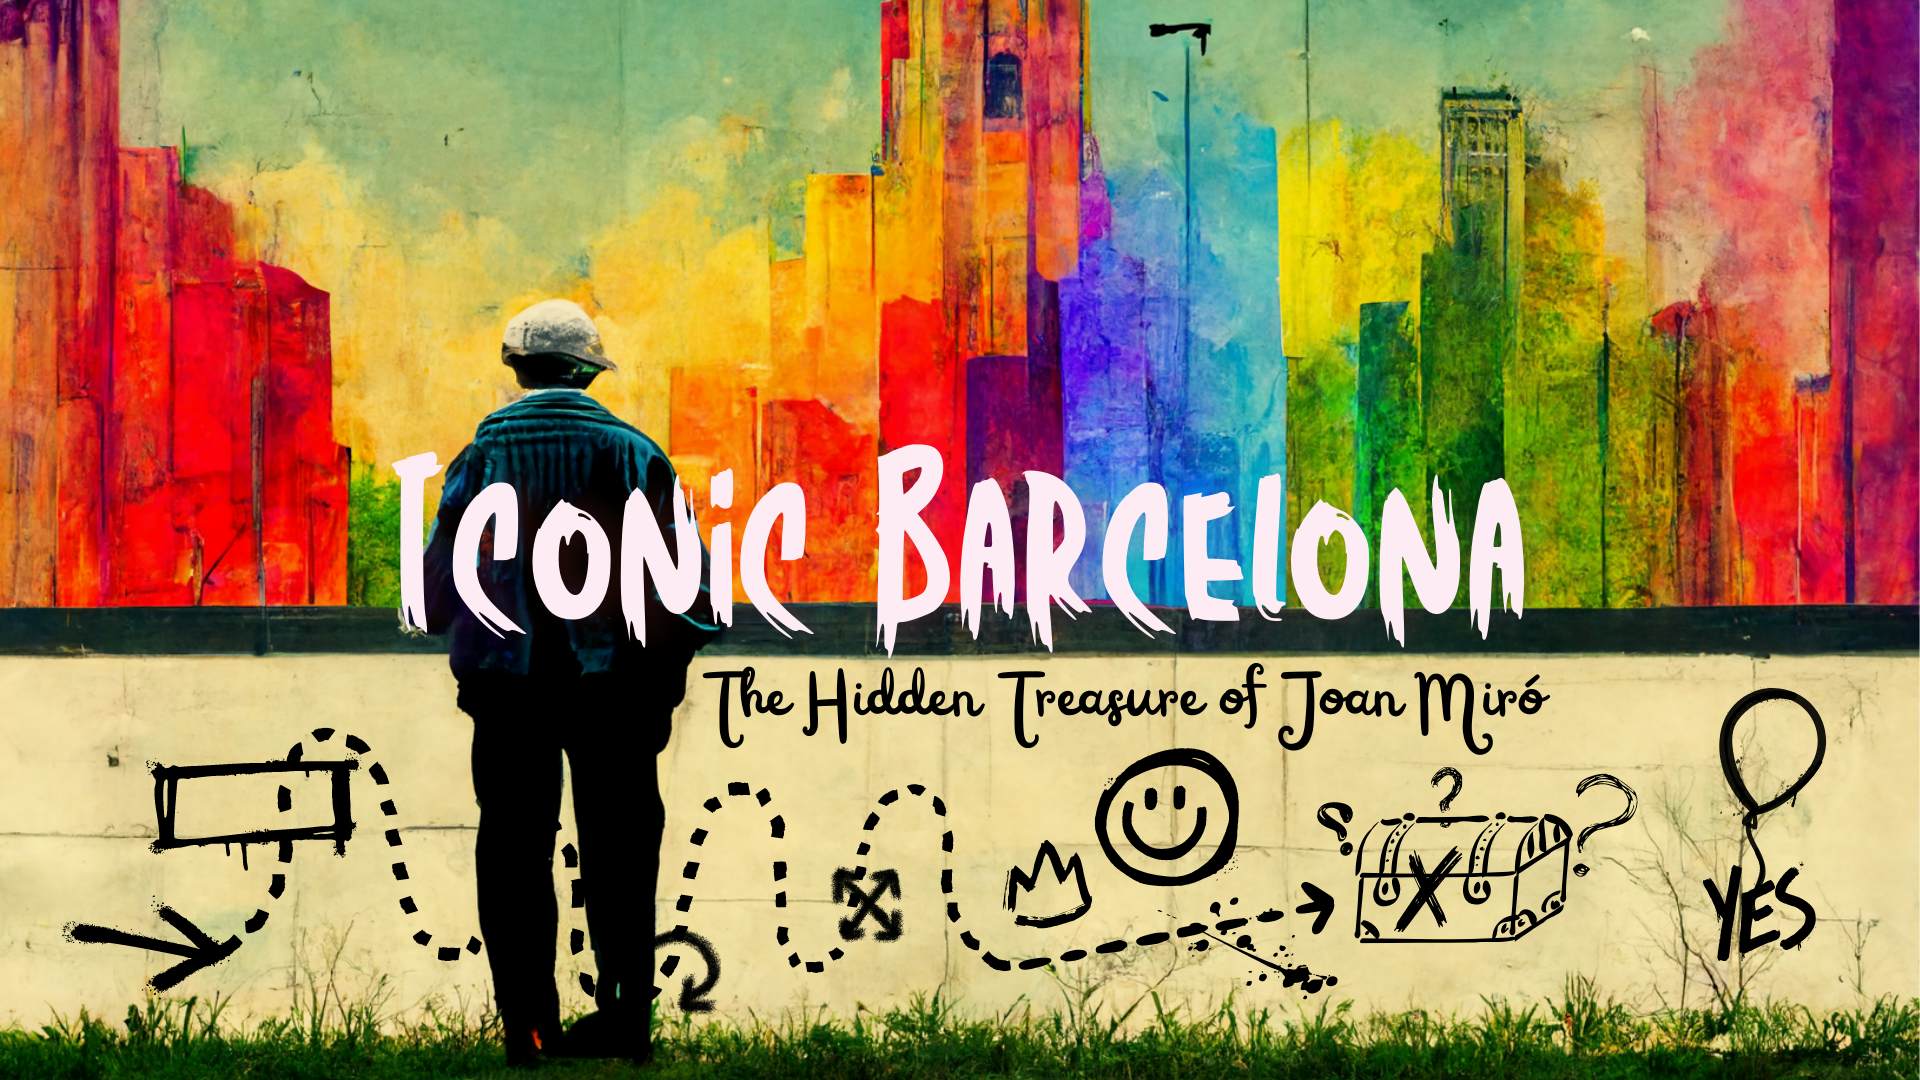 Iconic Barcelona: The Hidden Treasure of Joan Miró image